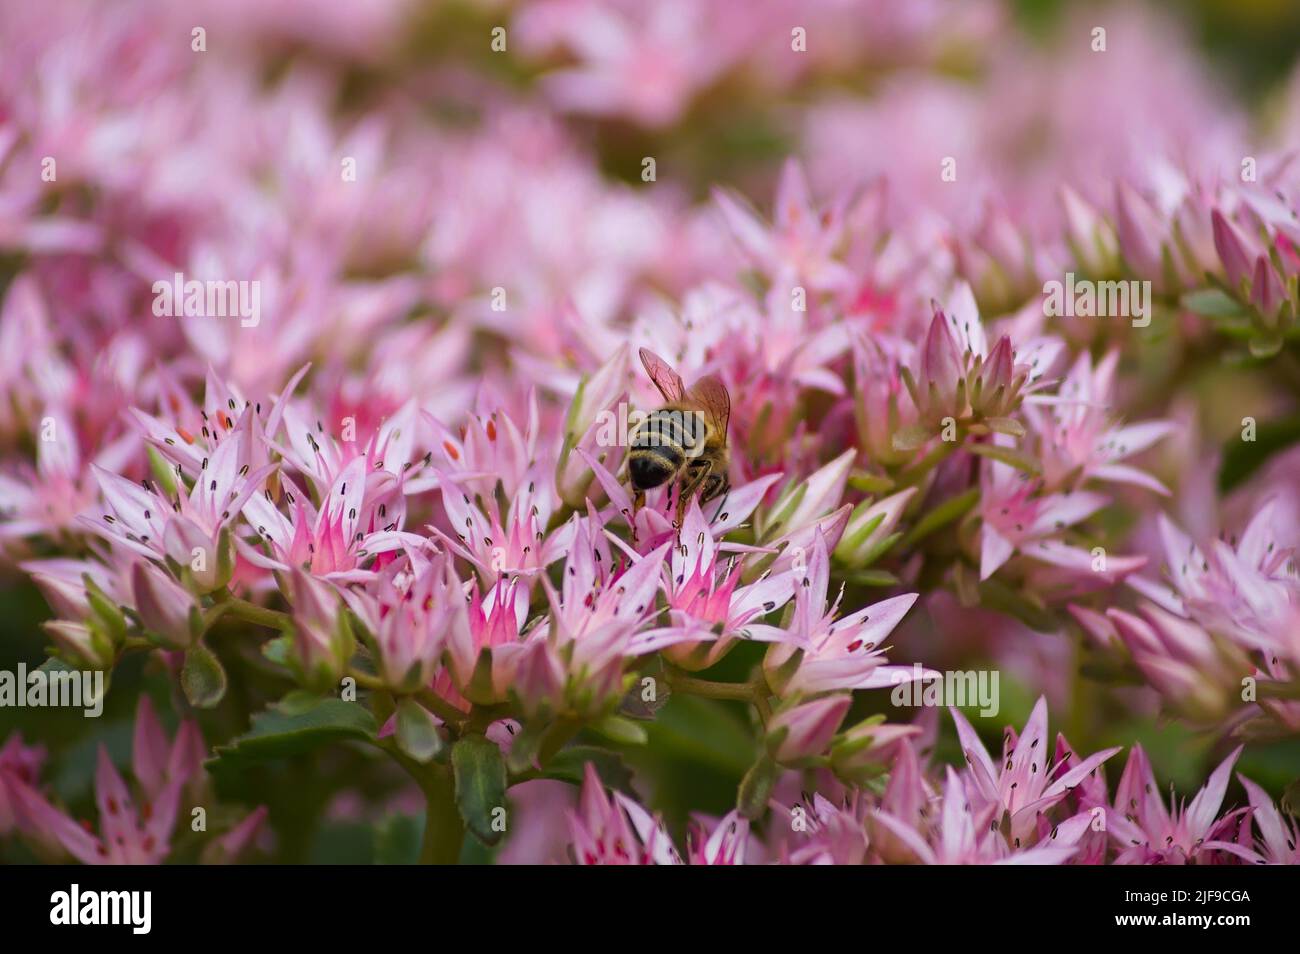 Worker bee on pink (Sedum spectabile) flower bush with soft focus background Stock Photo